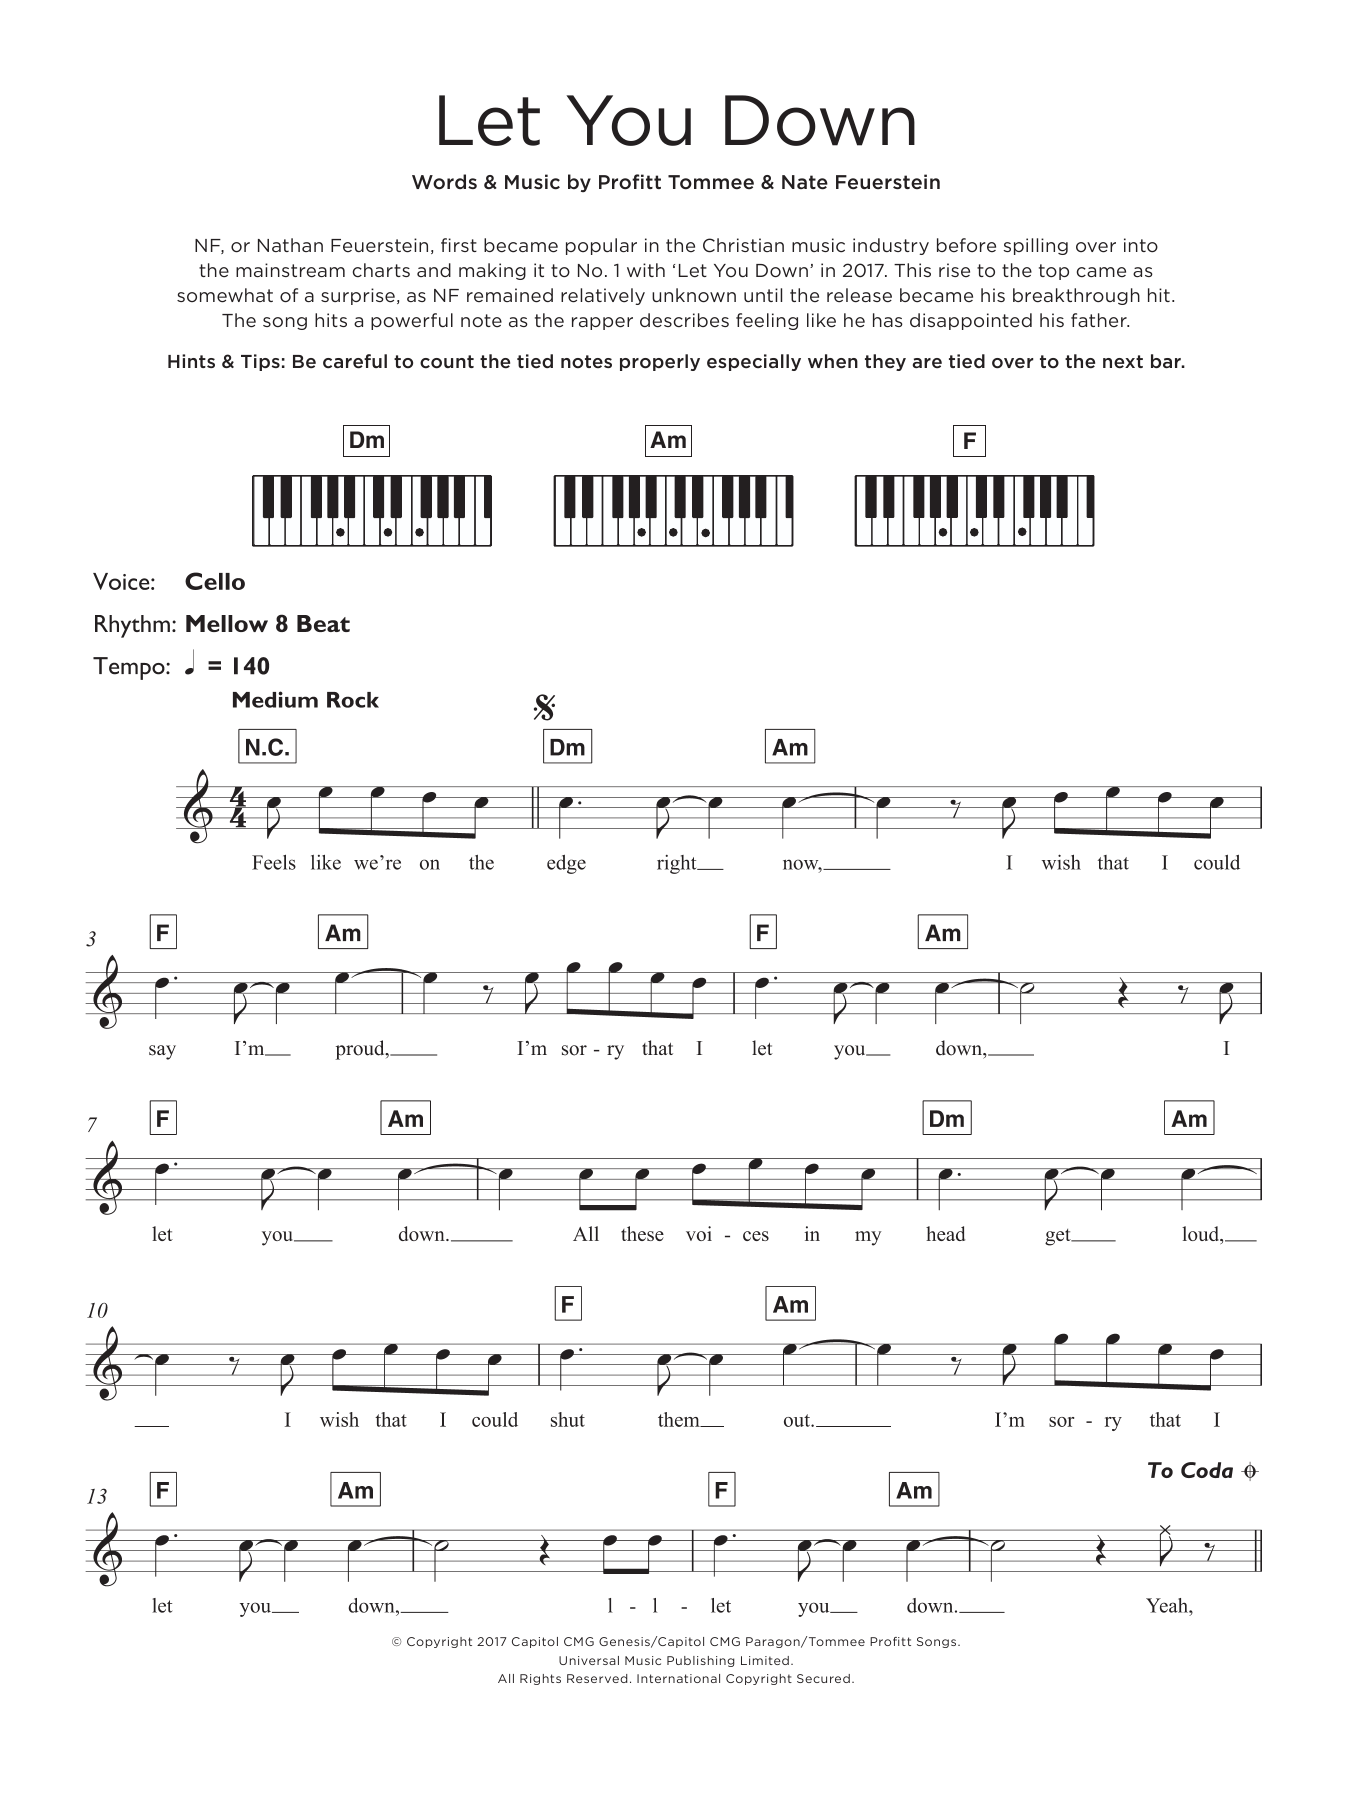 NF Let You Down Sheet Music Notes & Chords for Ukulele - Download or Print PDF